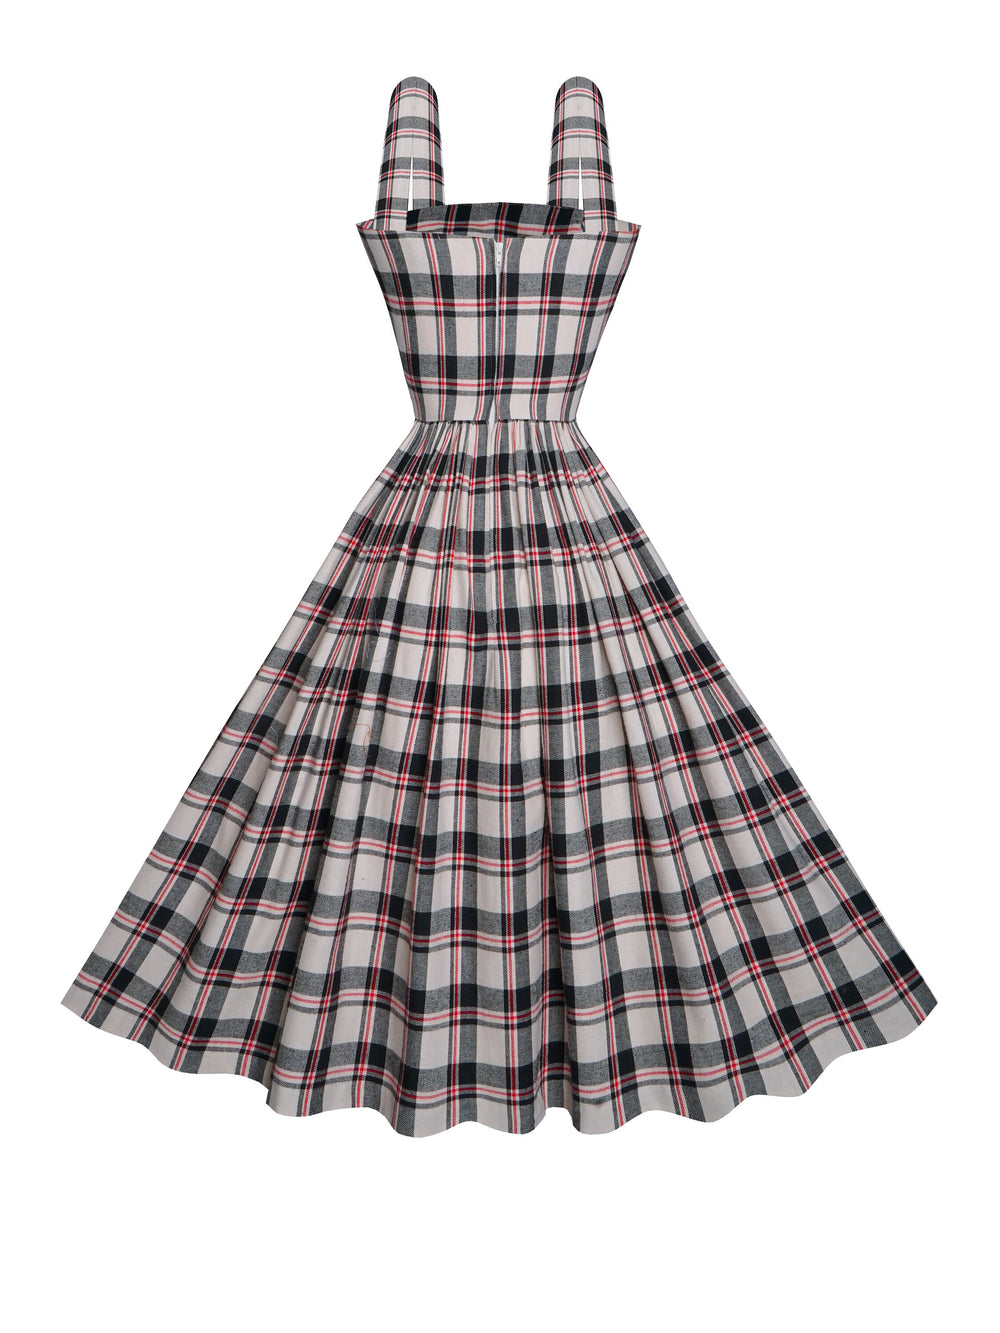 RTS - Size S - Lana Dress "Windsor Plaid"